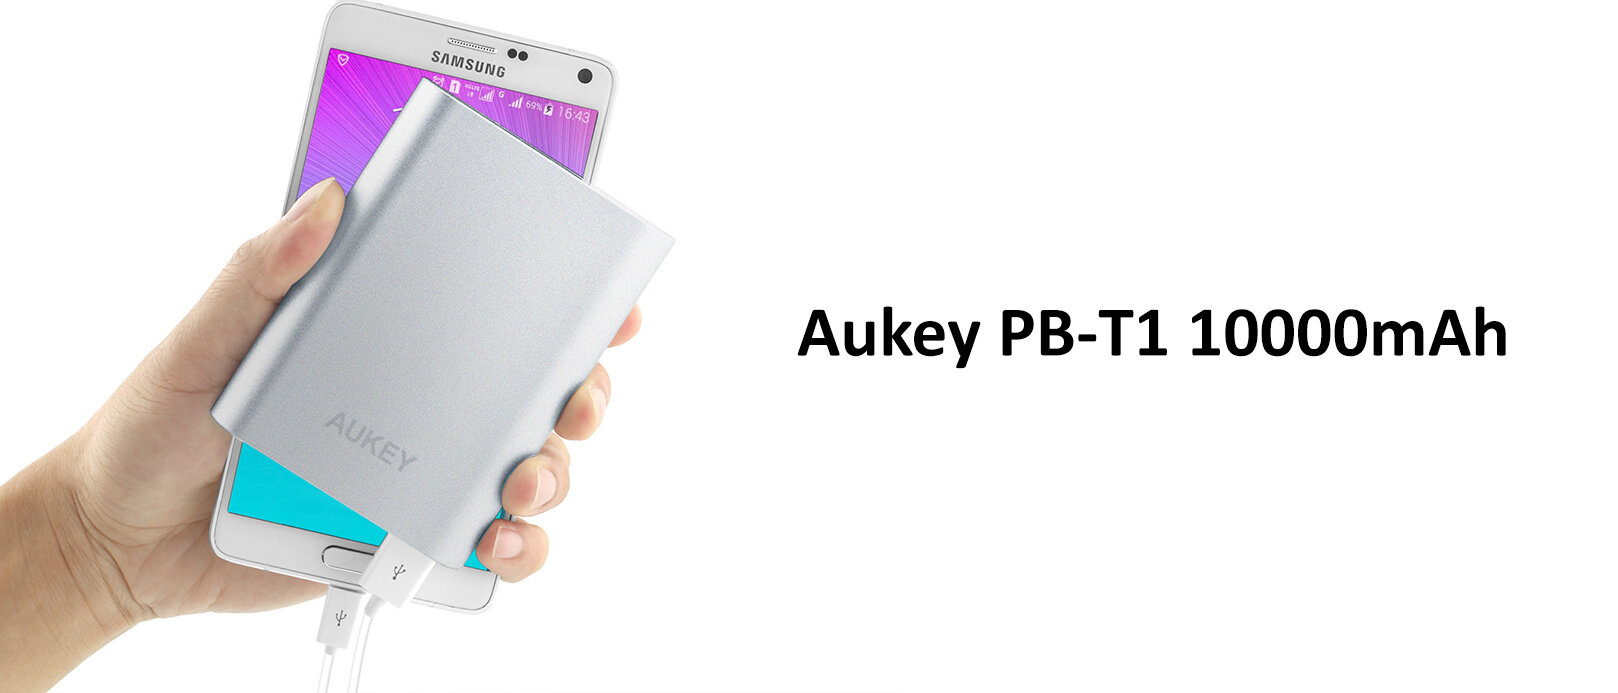 Aukey PB-T1 10000mAh